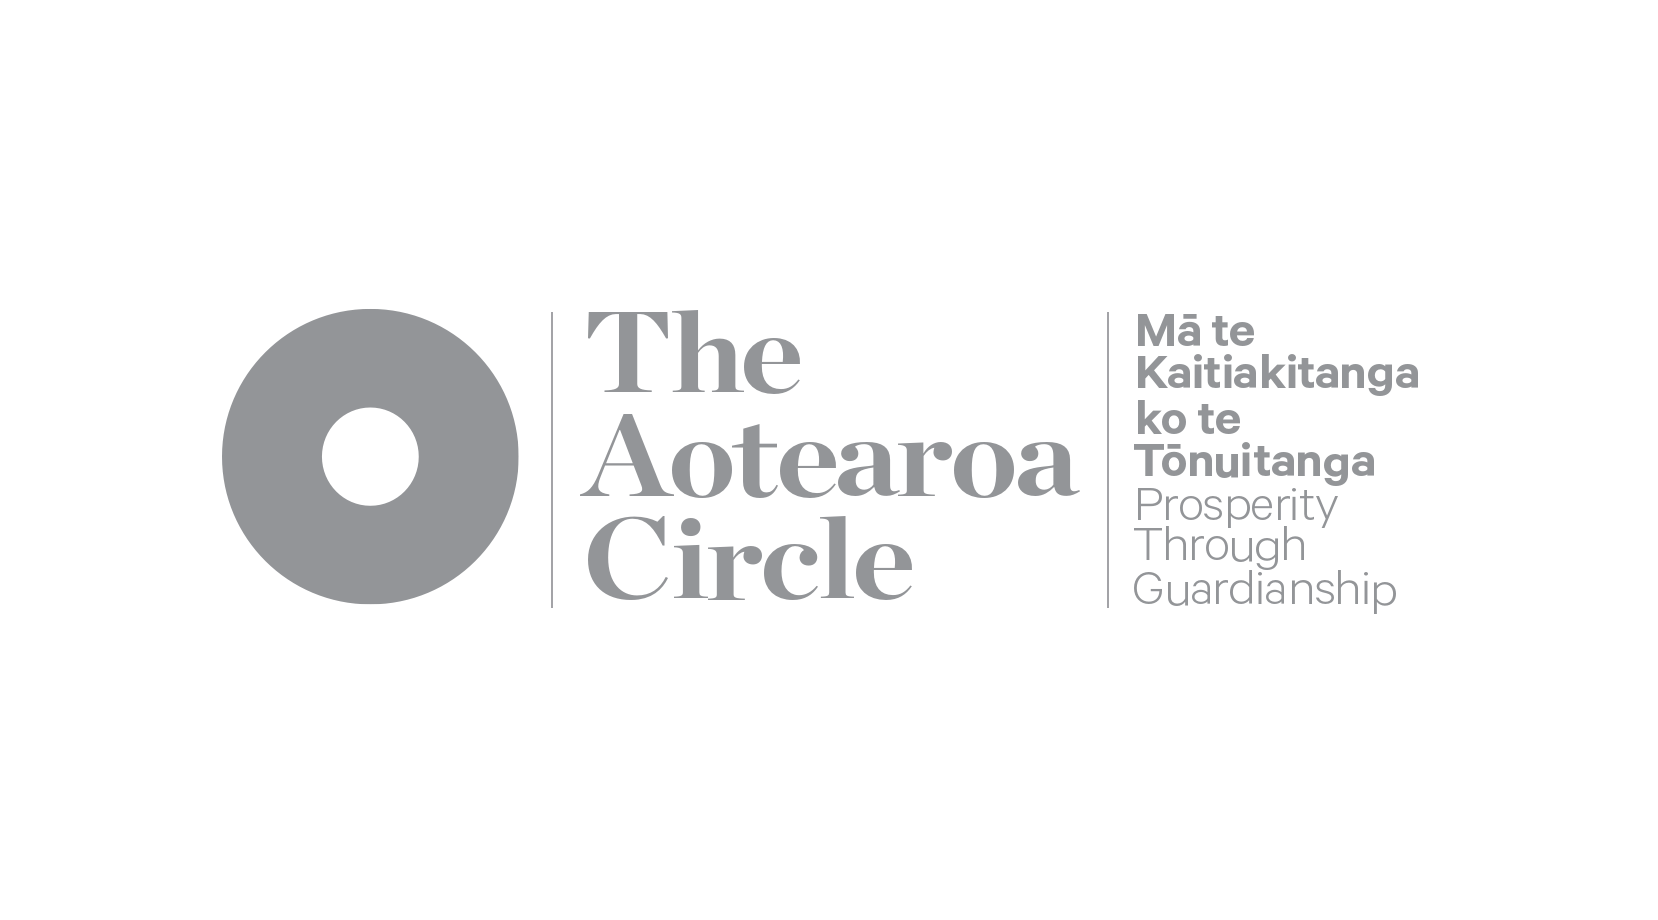 Sustainability The Aotearoa Circle